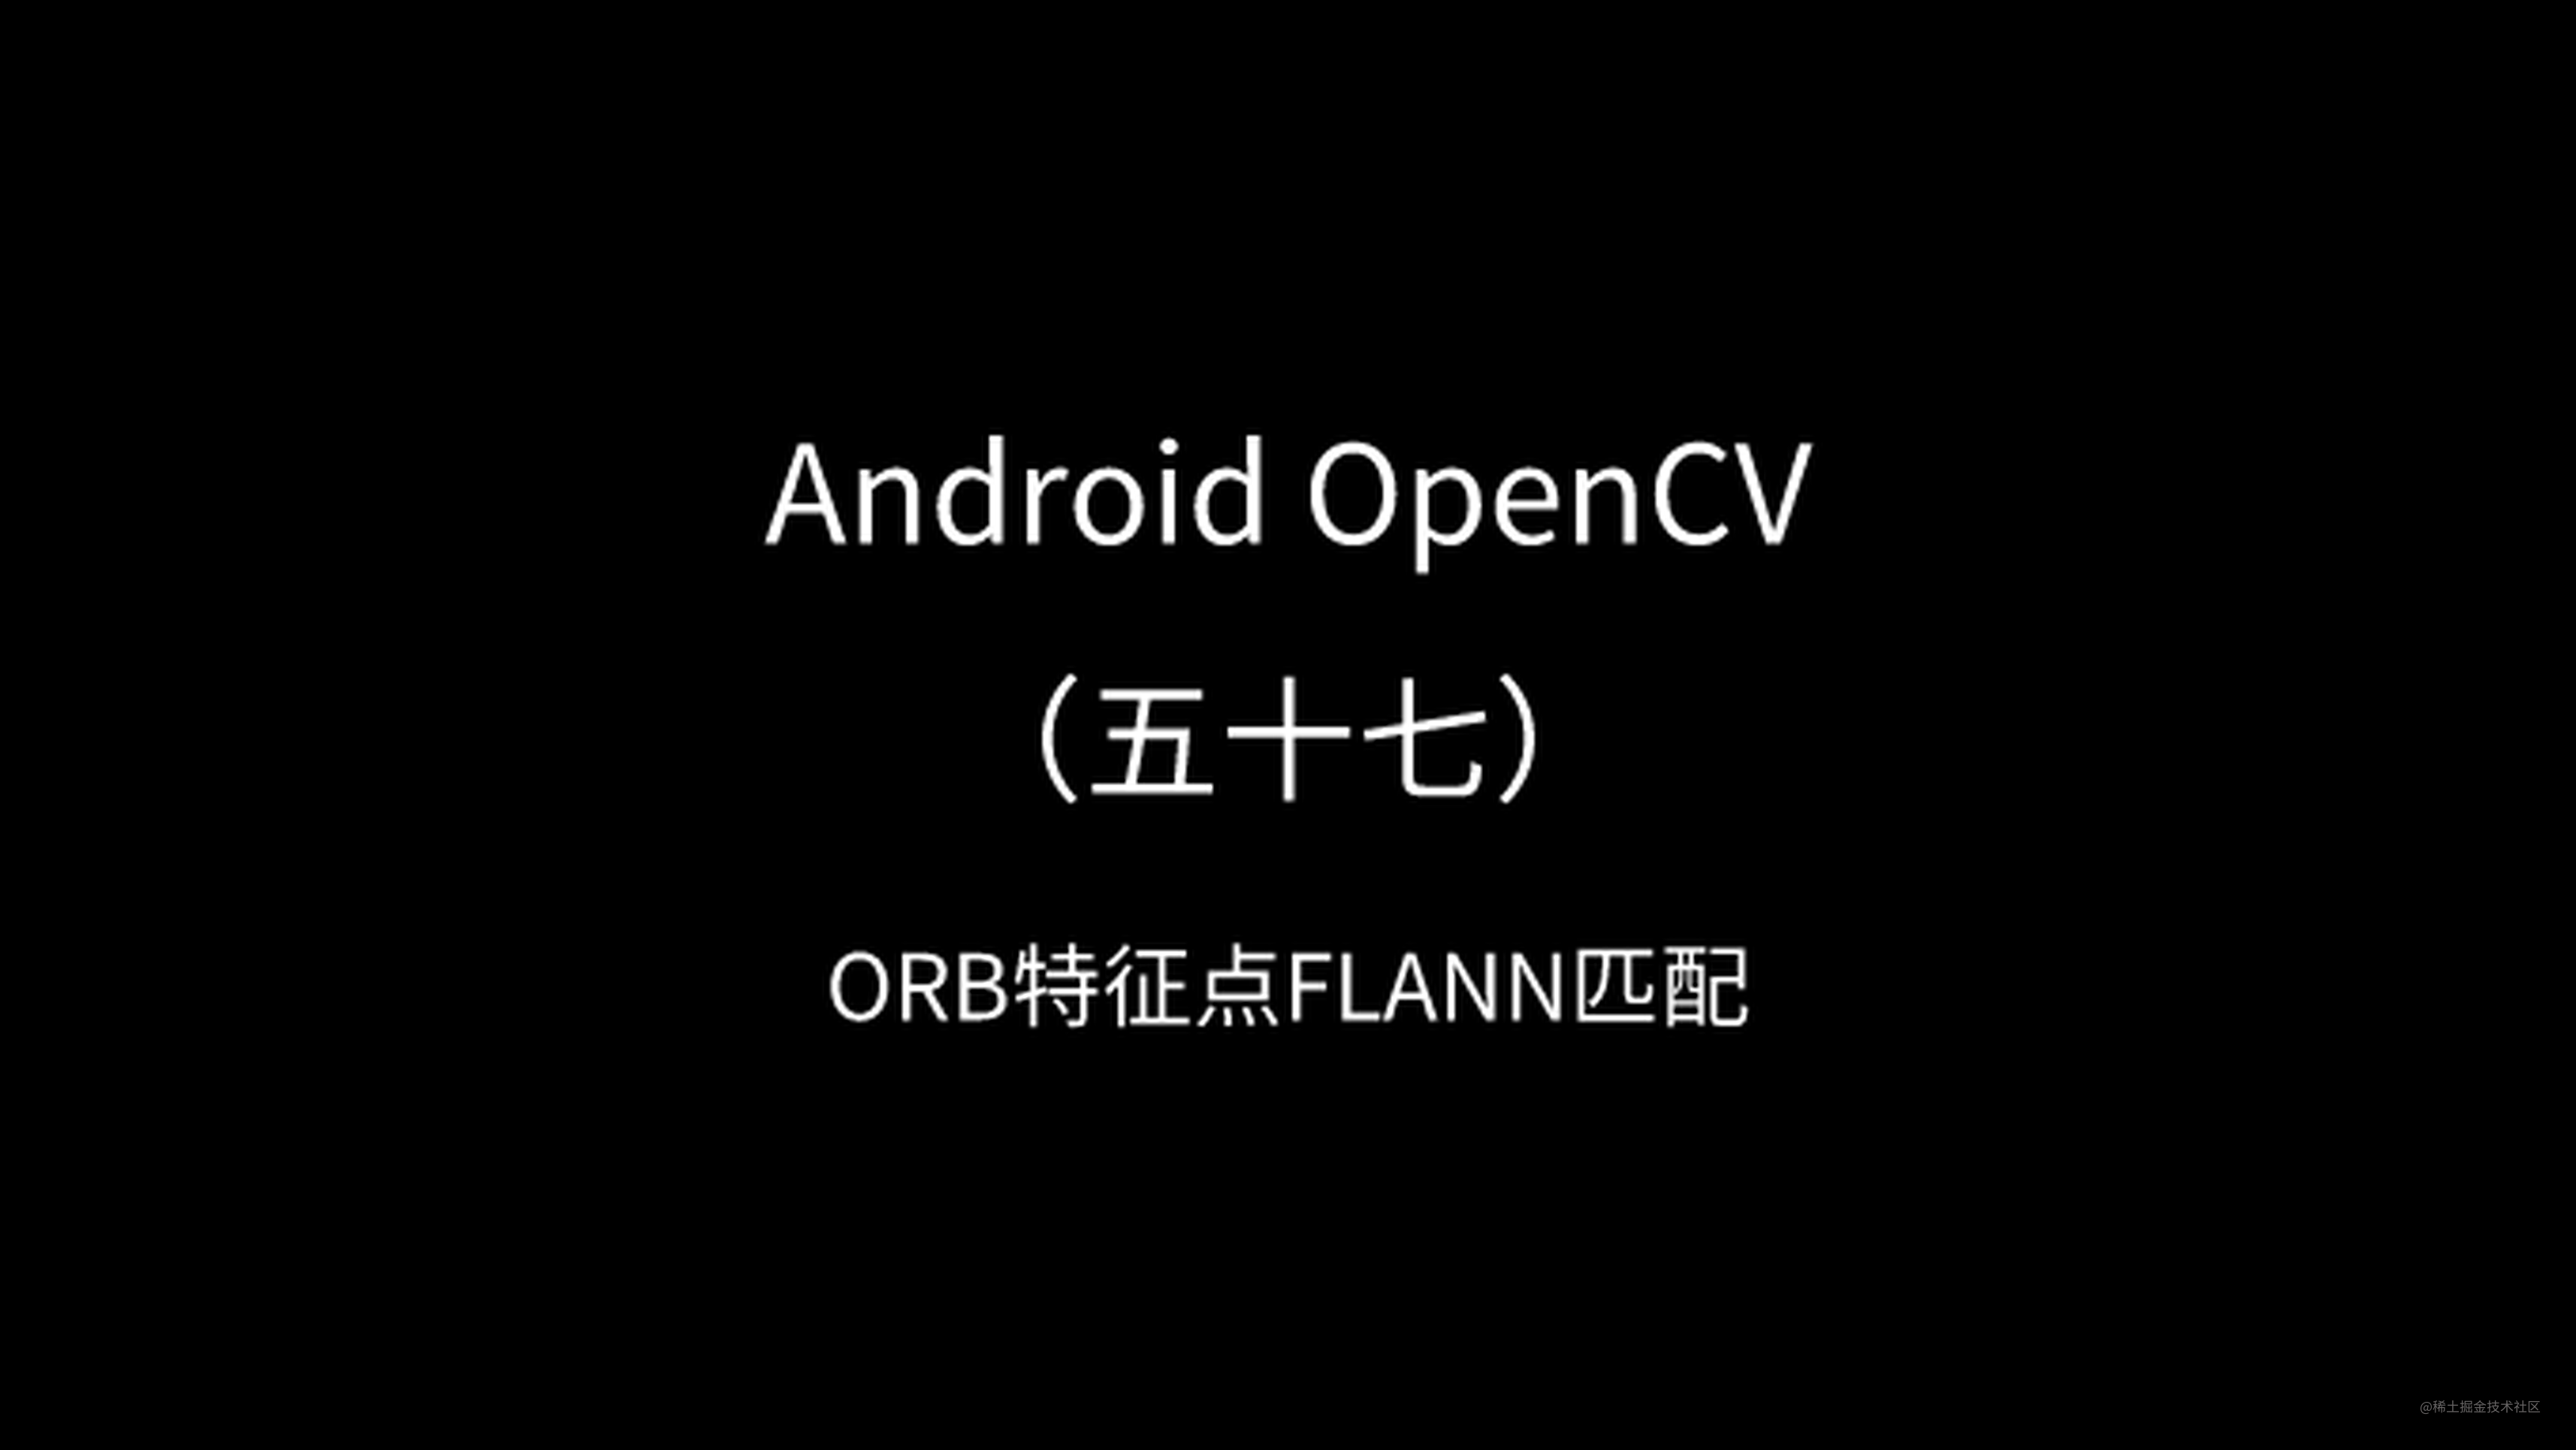 Android OpenCV（五十七）：ORB特征点FLANN匹配